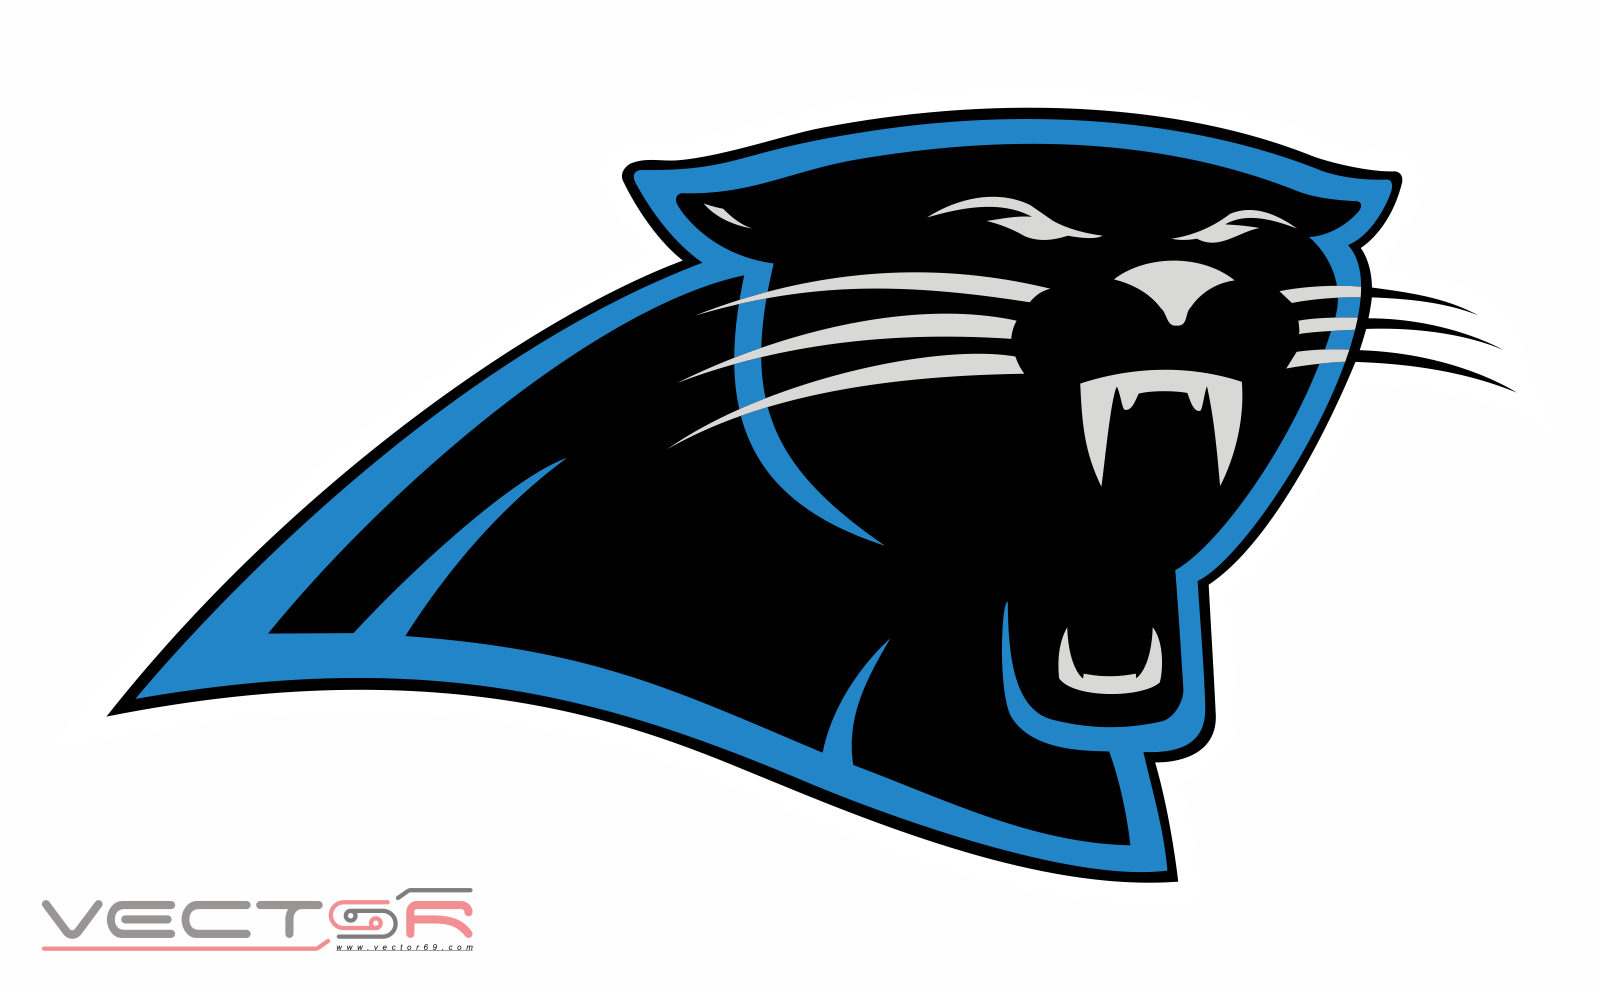 Carolina Panthers 1995-2011 Logo - Download Transparent Images, Portable Network Graphics (.PNG)